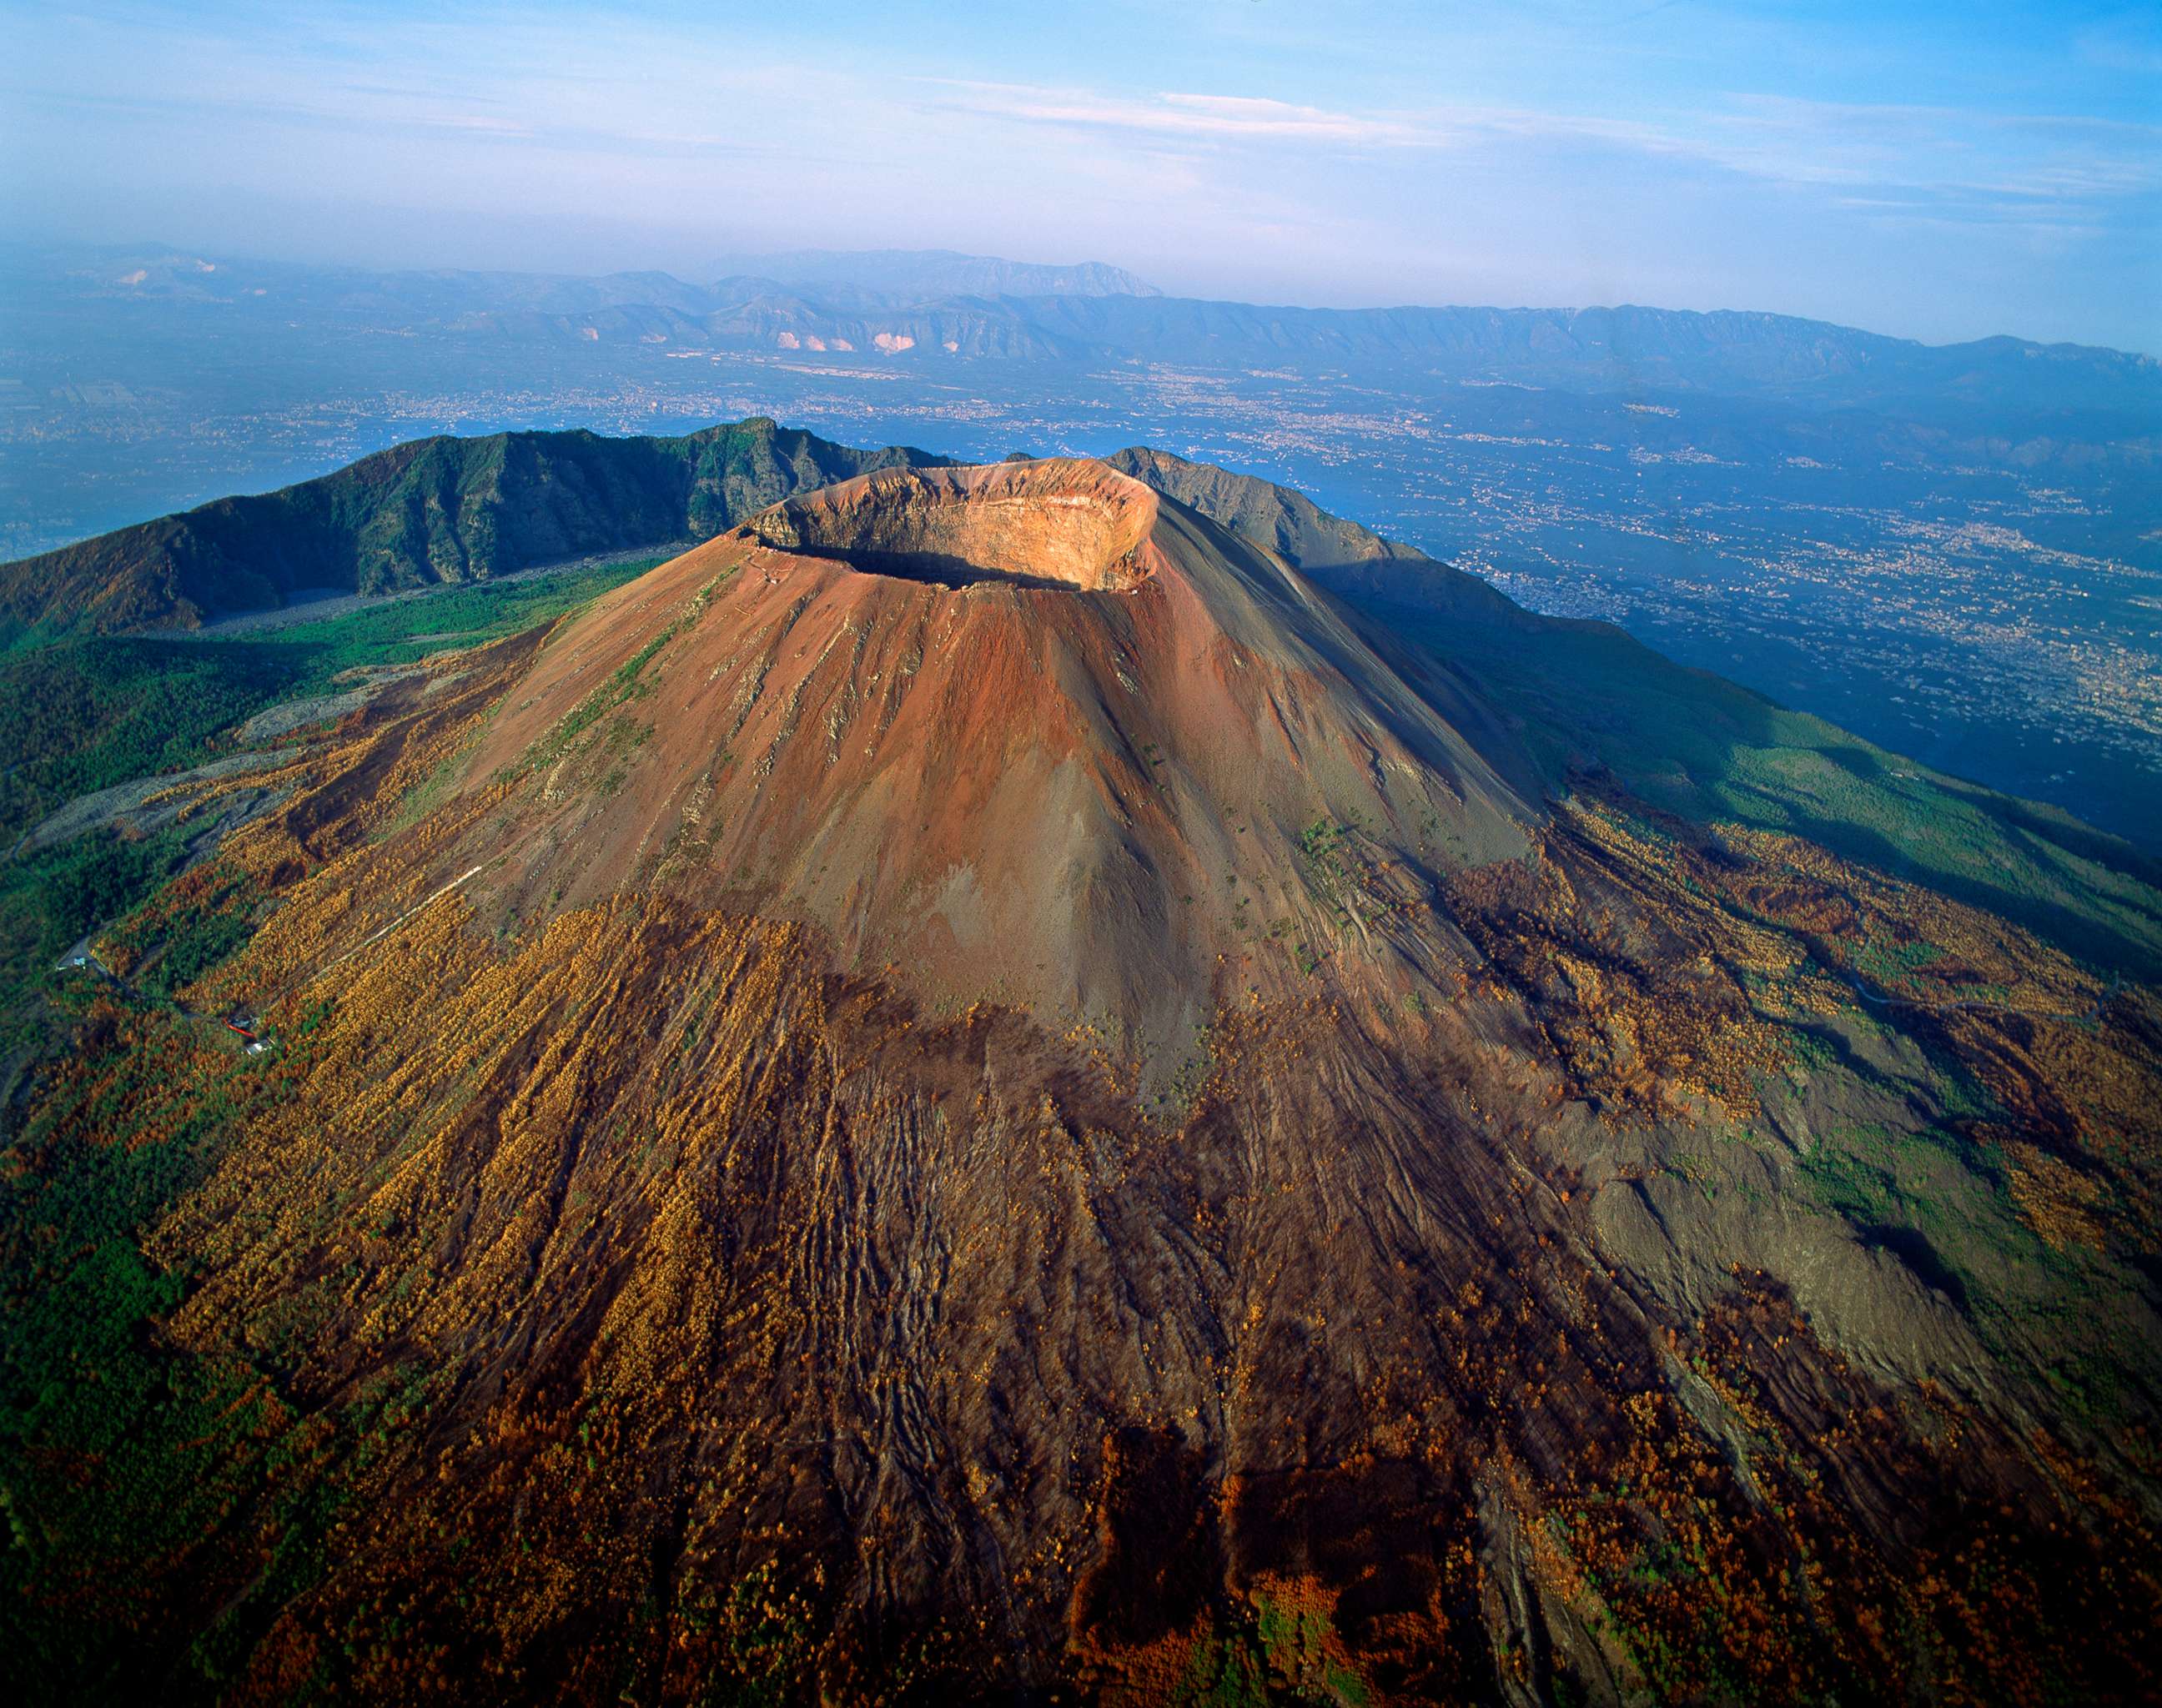 PHOTO: The volcano Mount Vesuvius is shown in Campania, Italy.